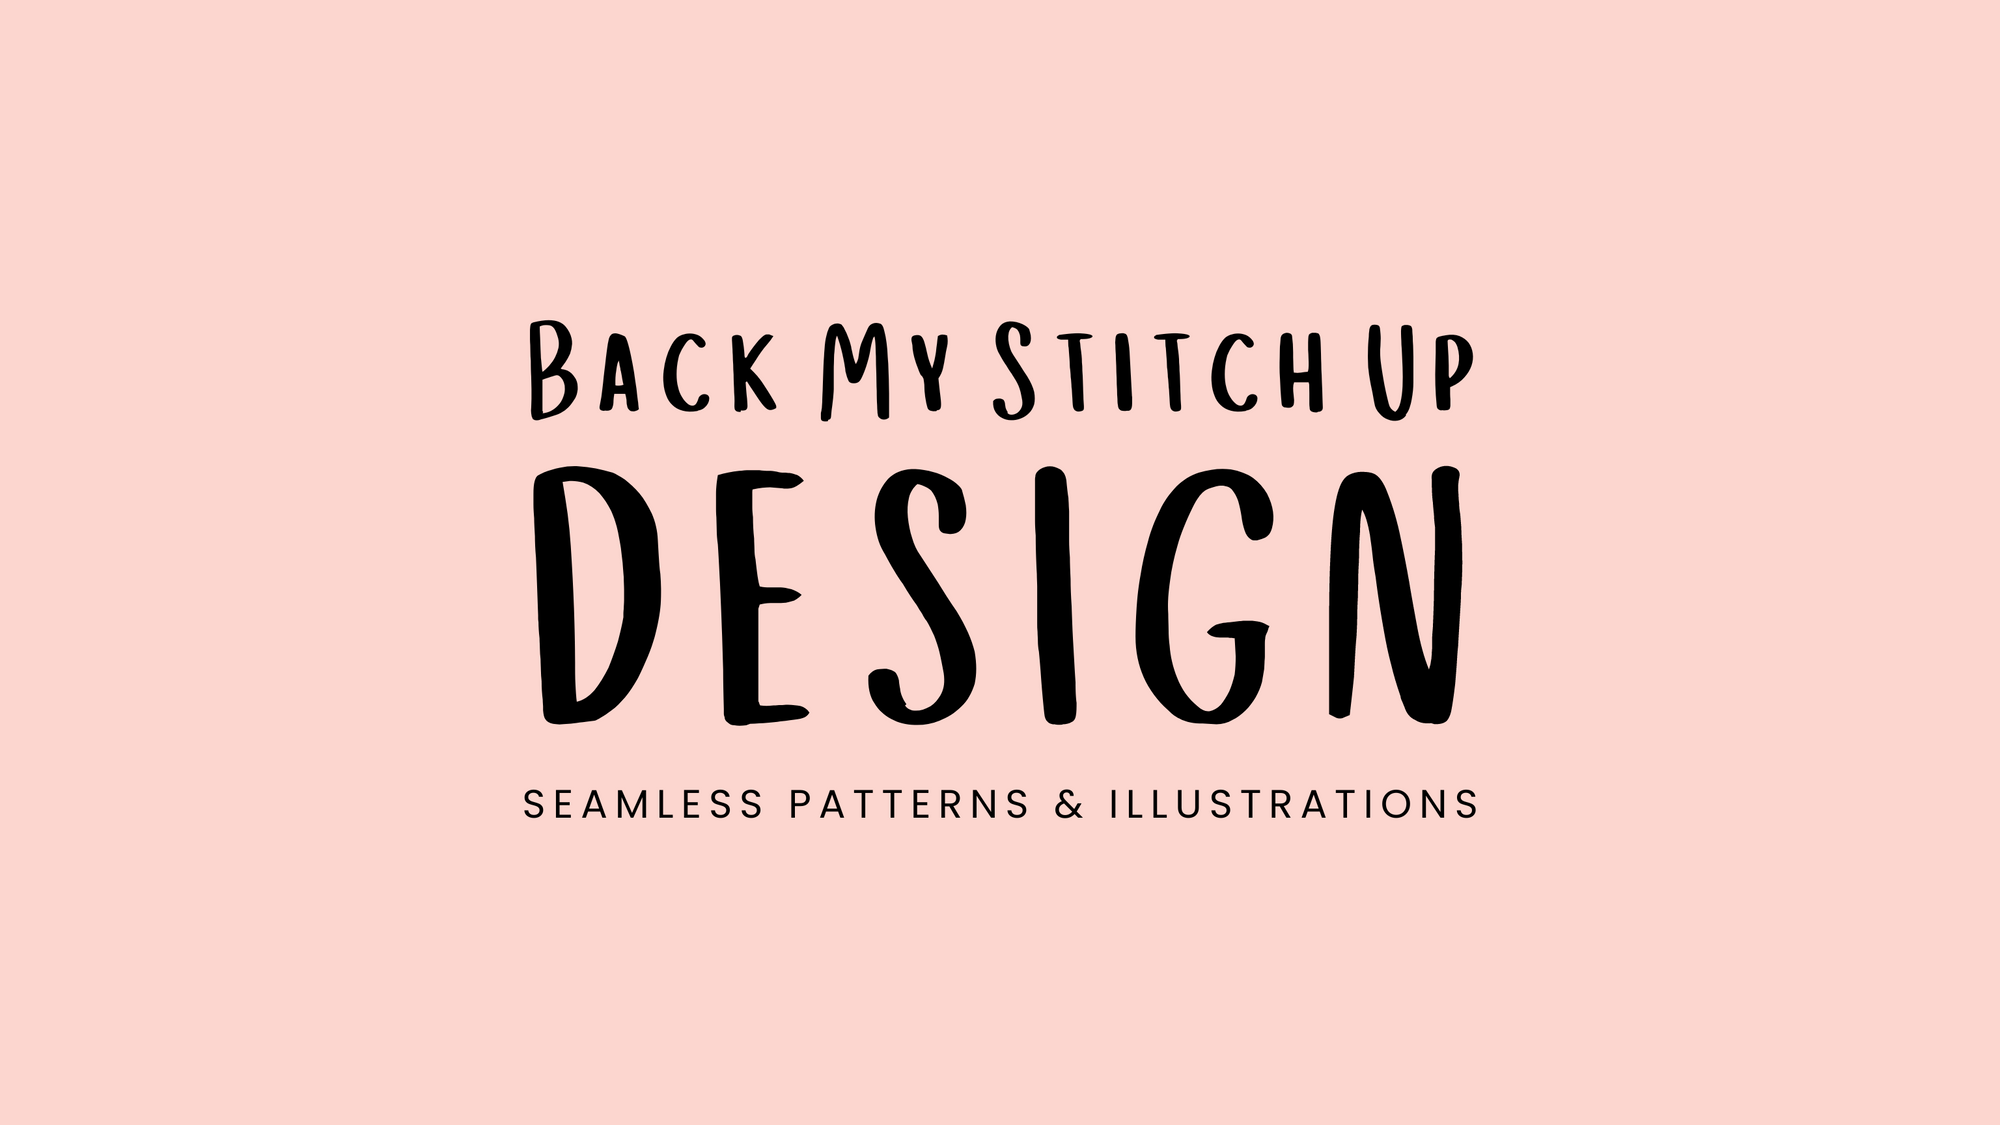 Designs by Back My Stitch Up Design